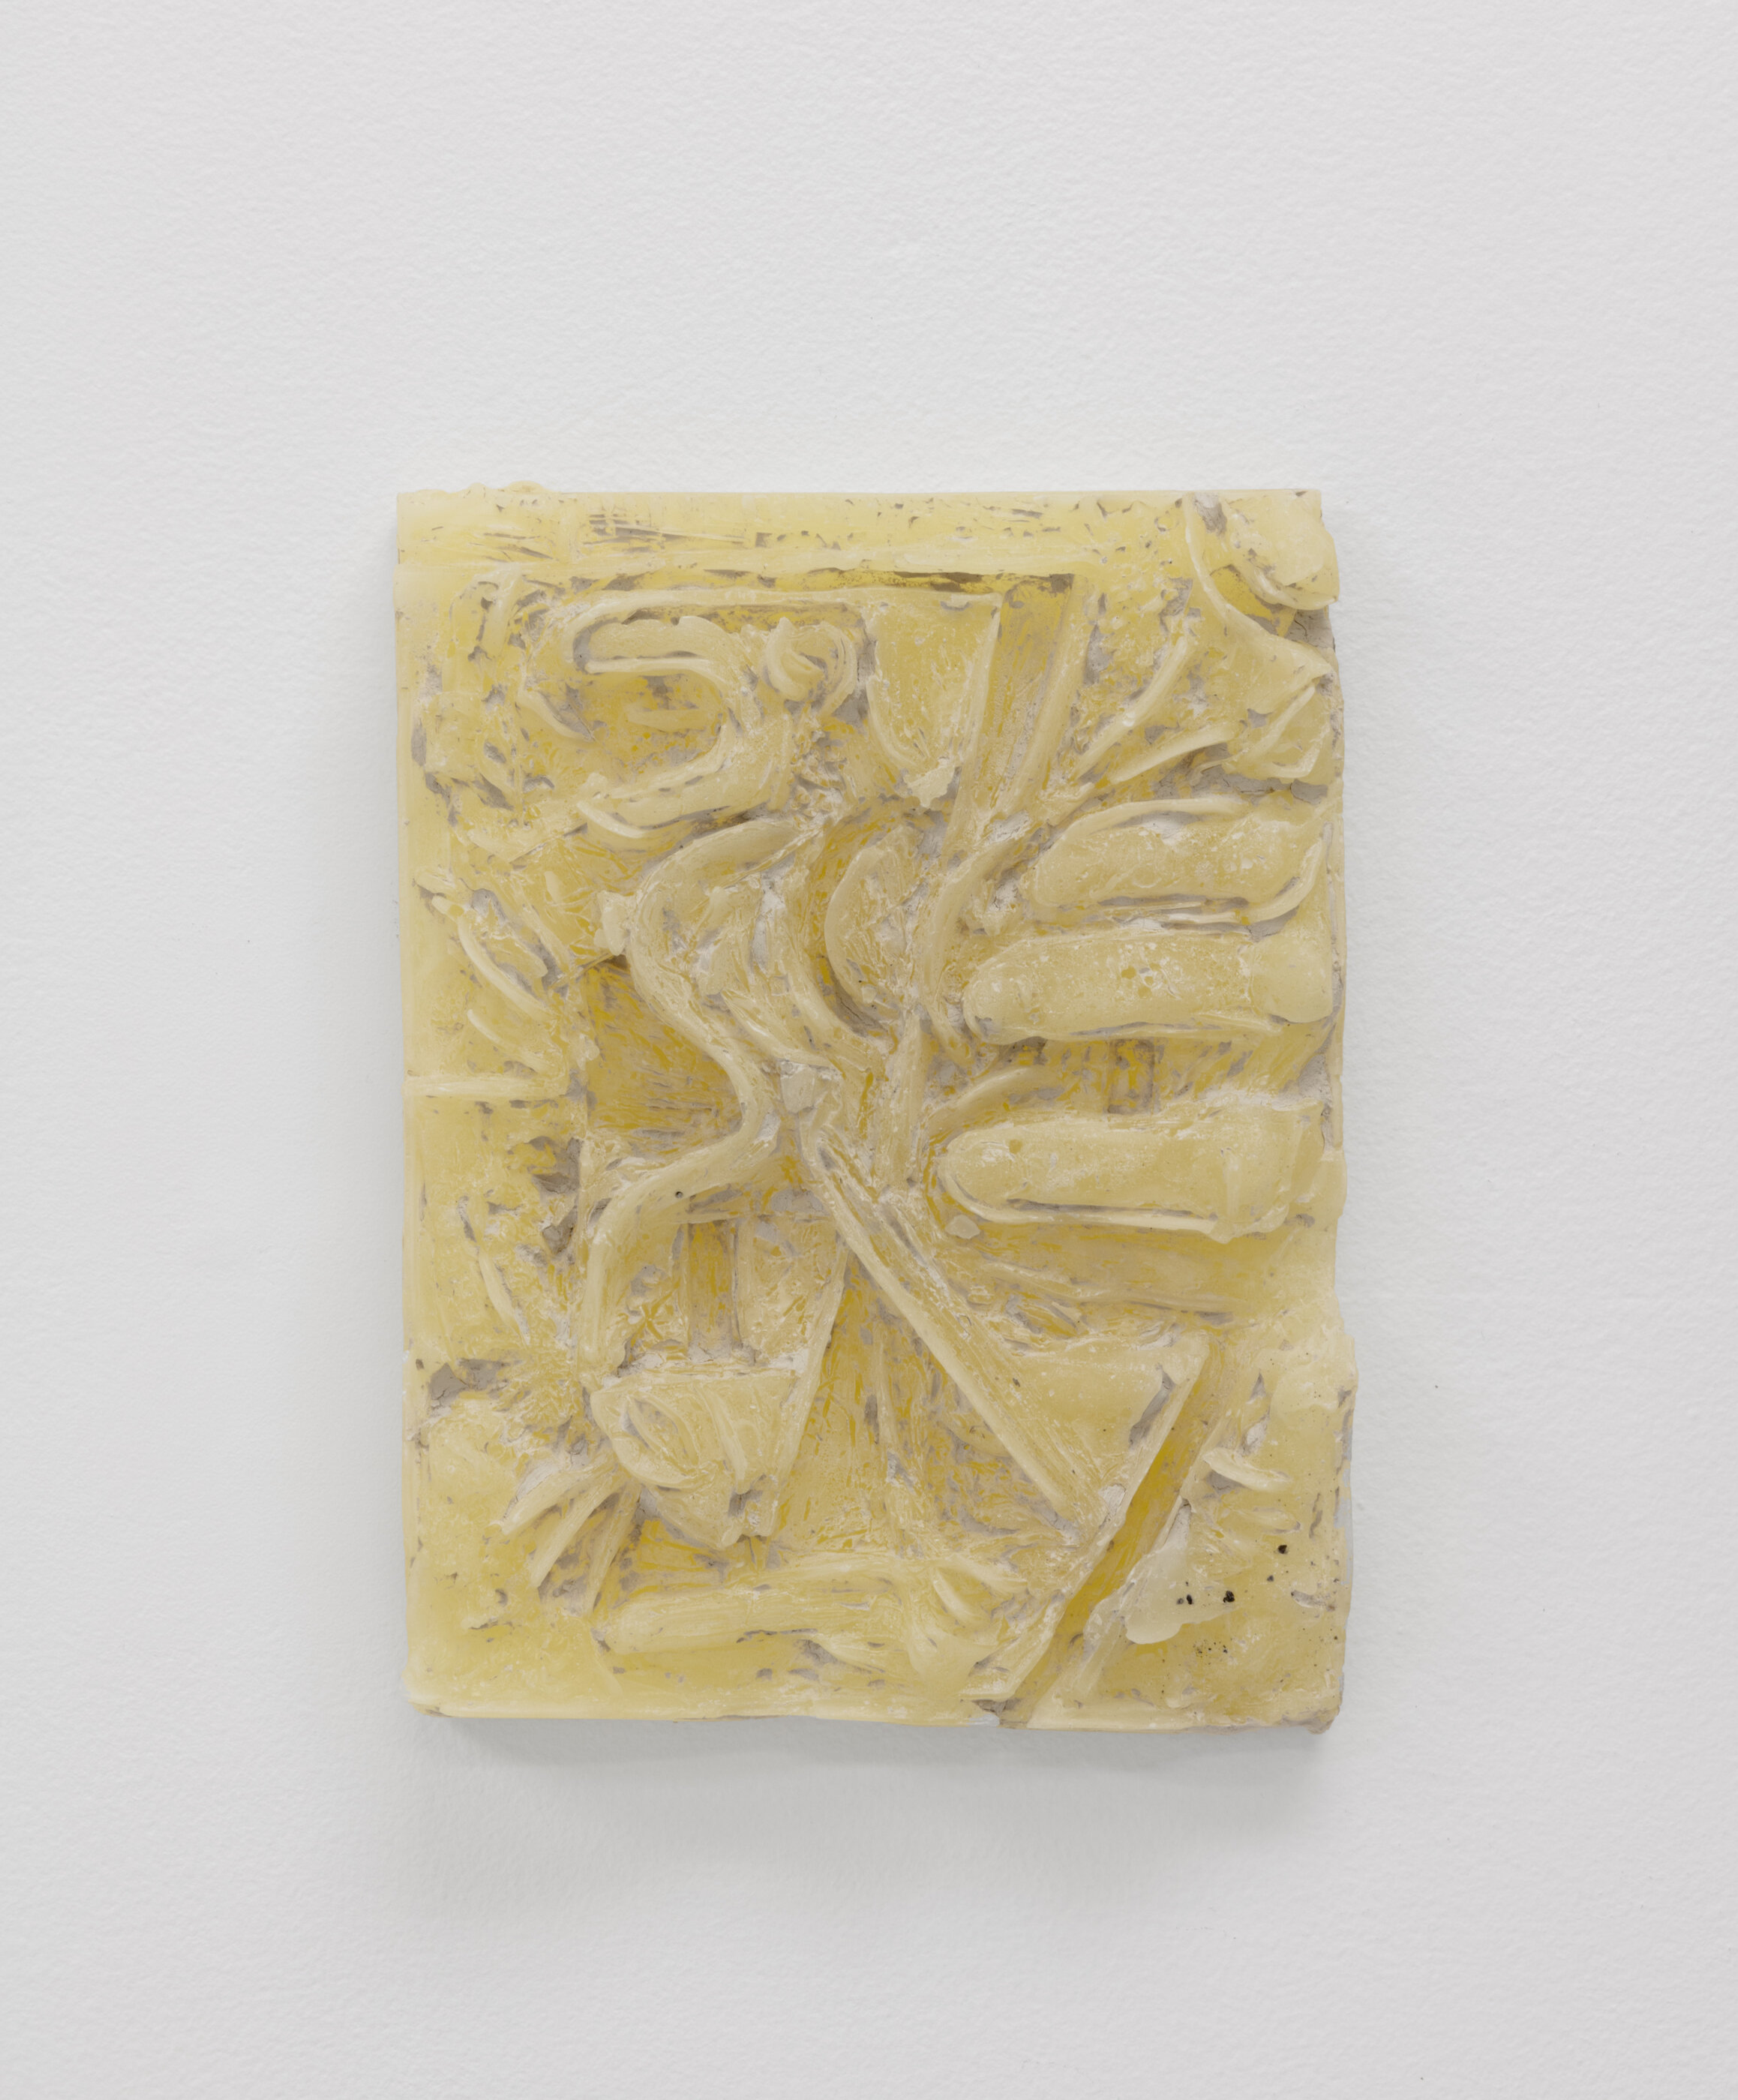  Martin Chramosta, Proud Fowl, 2019, wax, 24 x 17 cm 